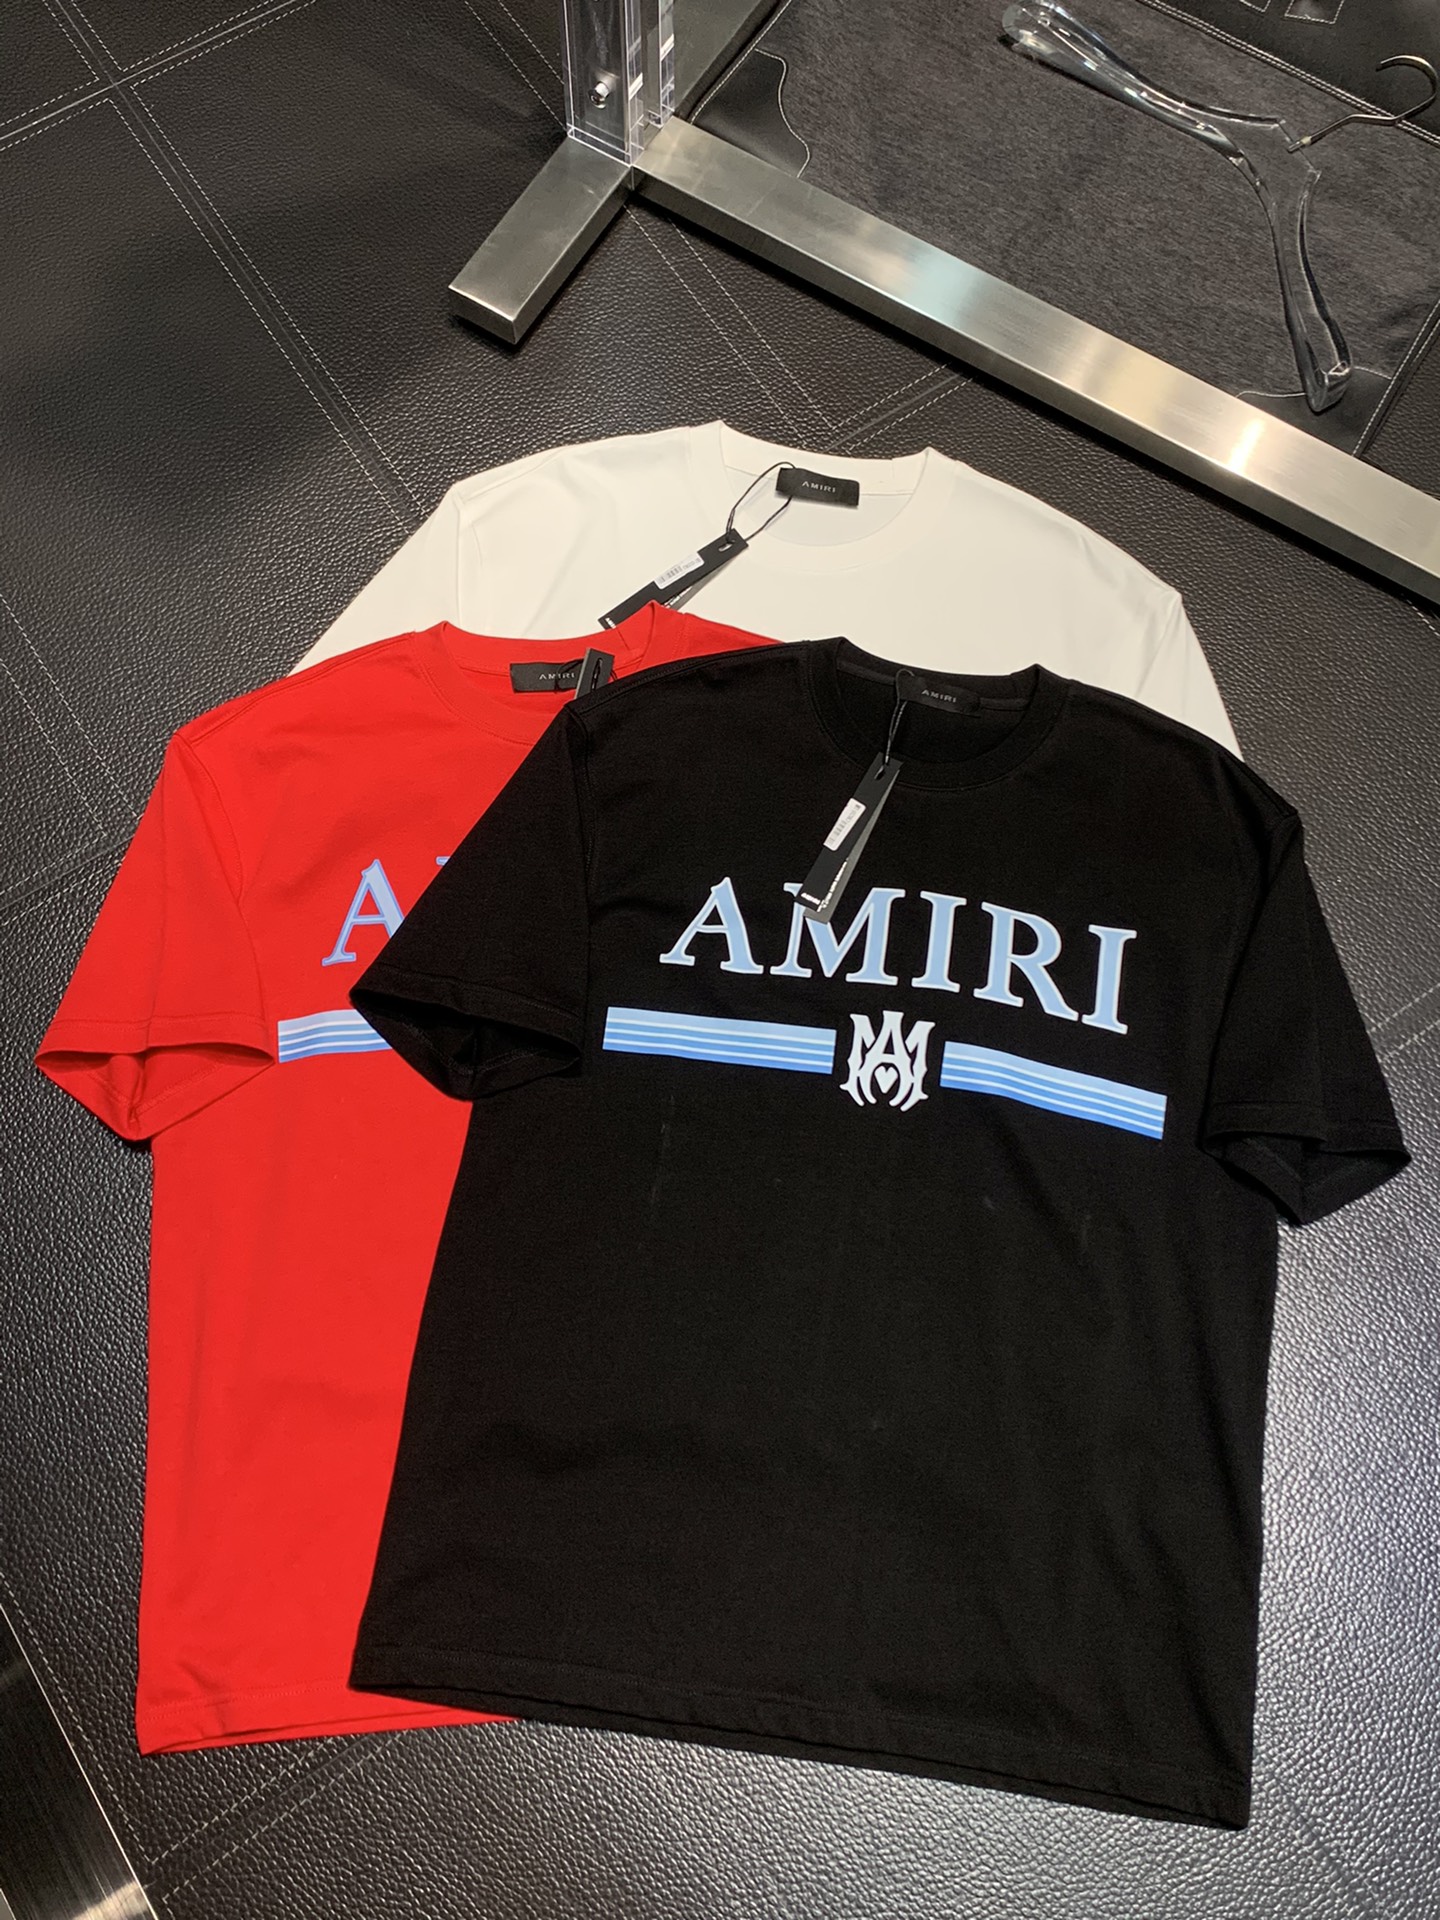 Amiri Clothing T-Shirt Men Fashion Short Sleeve